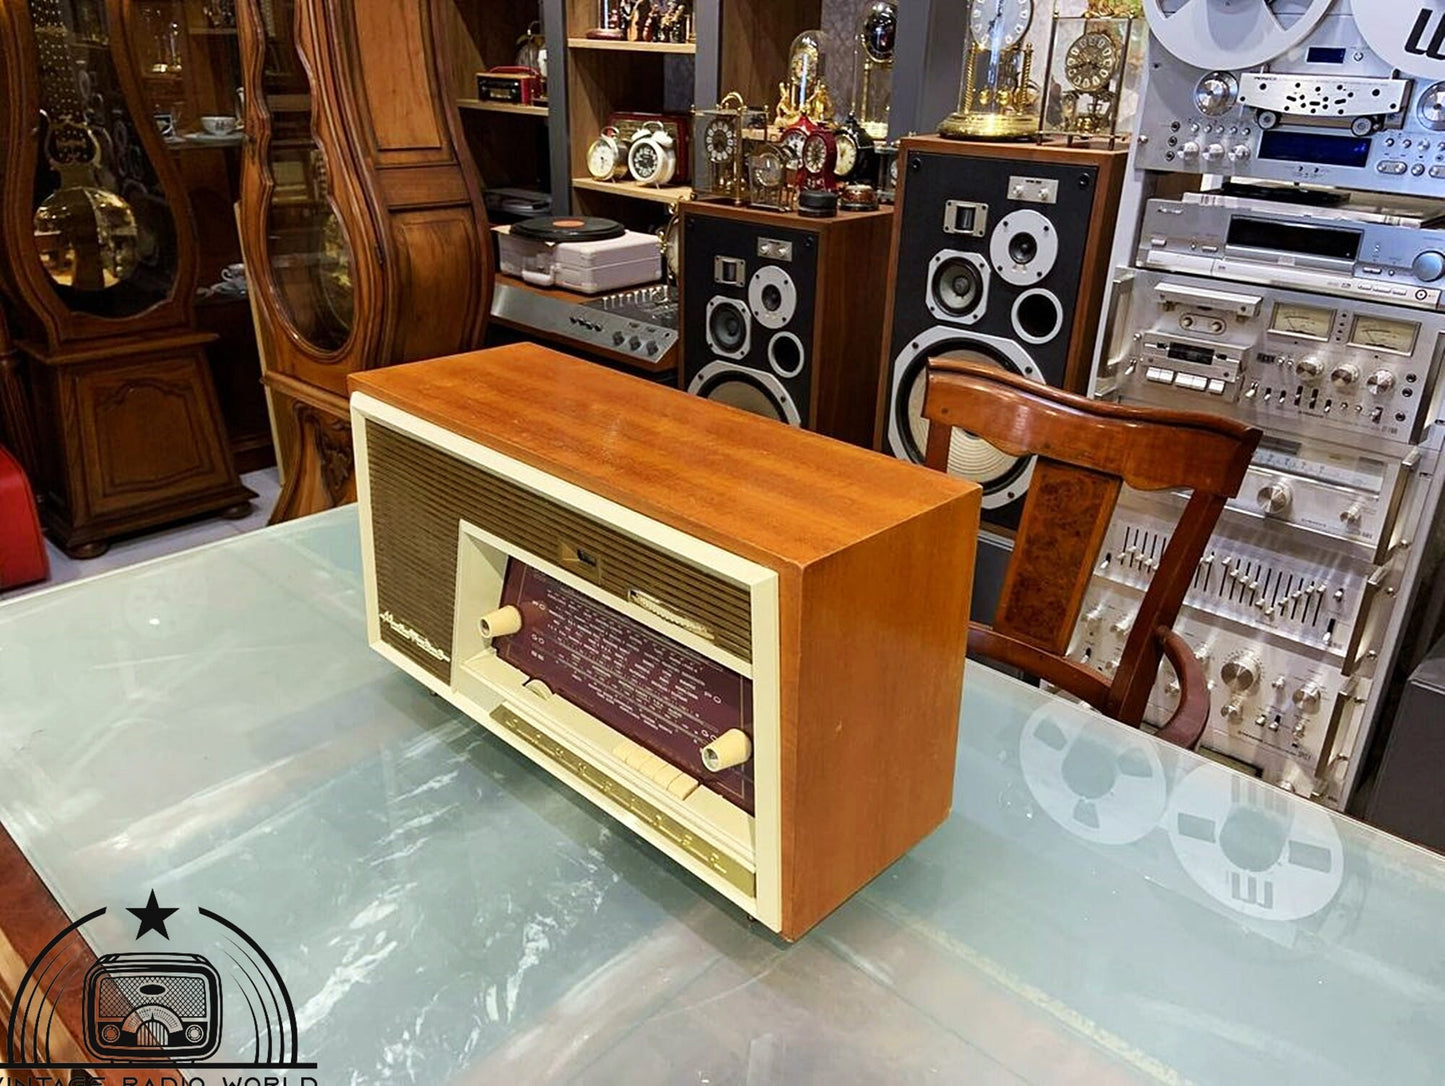 SchSchneider Vintage Radio - Retro Elegance with Lamp Feature - For Saleneider Radio | Vintage Radio | Orginal Old Radio | Radio | Lamp Radio |